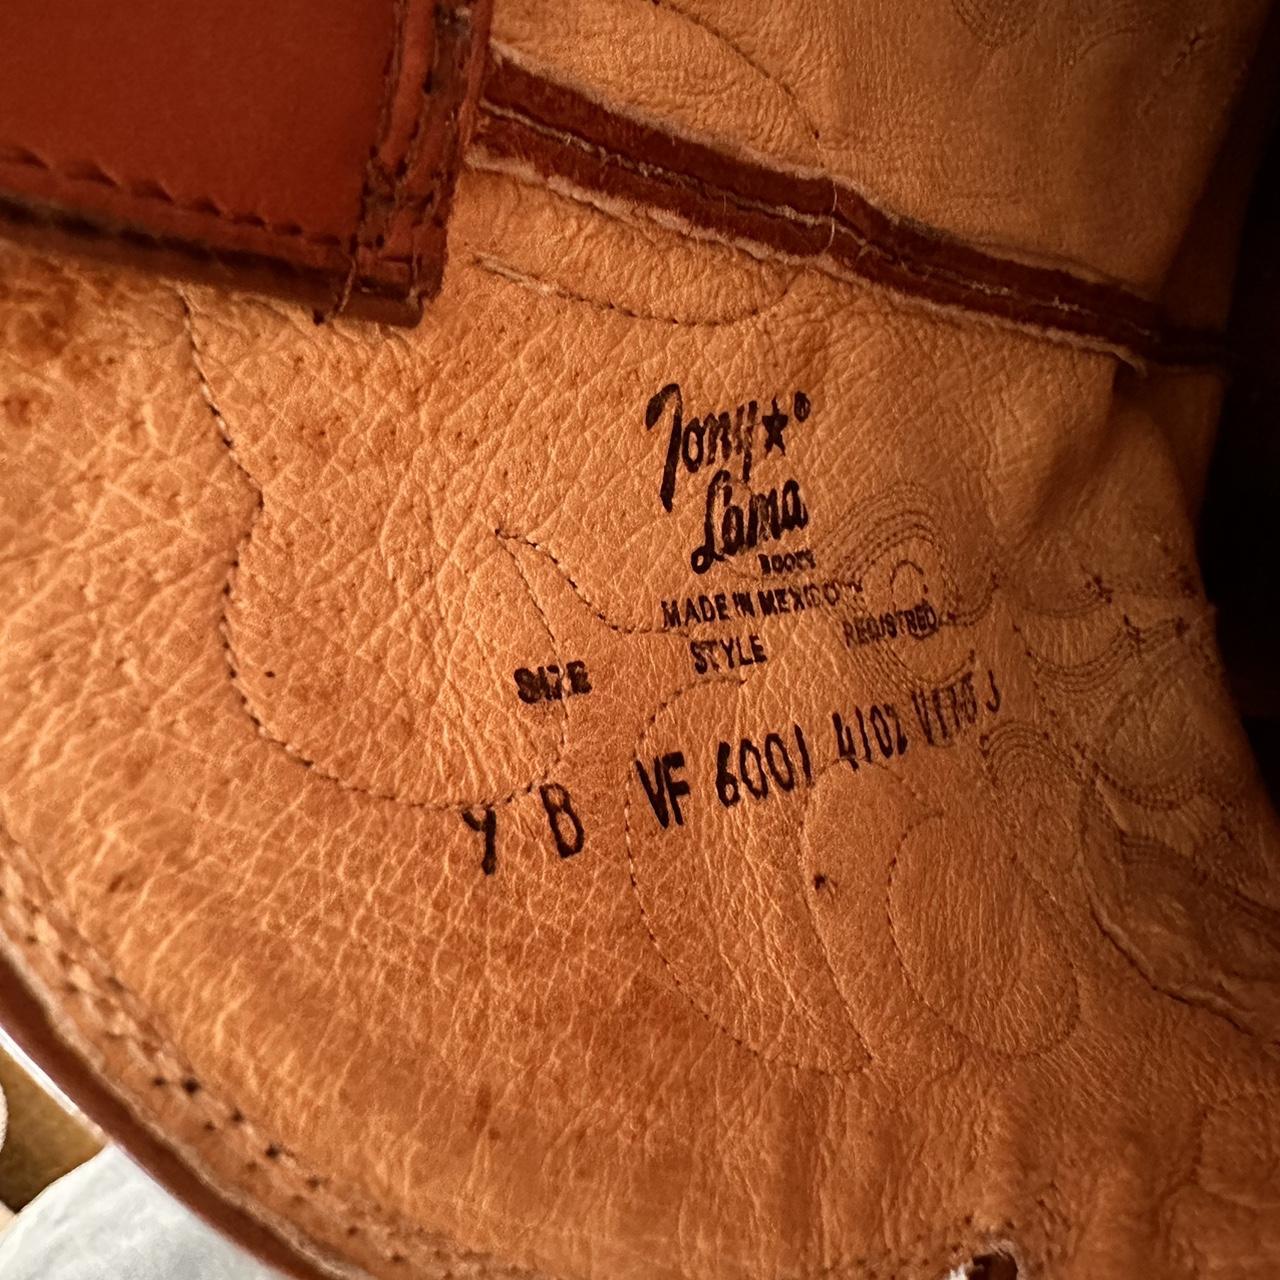 Tony Lama Cowboy Boots made in mexico - Depop